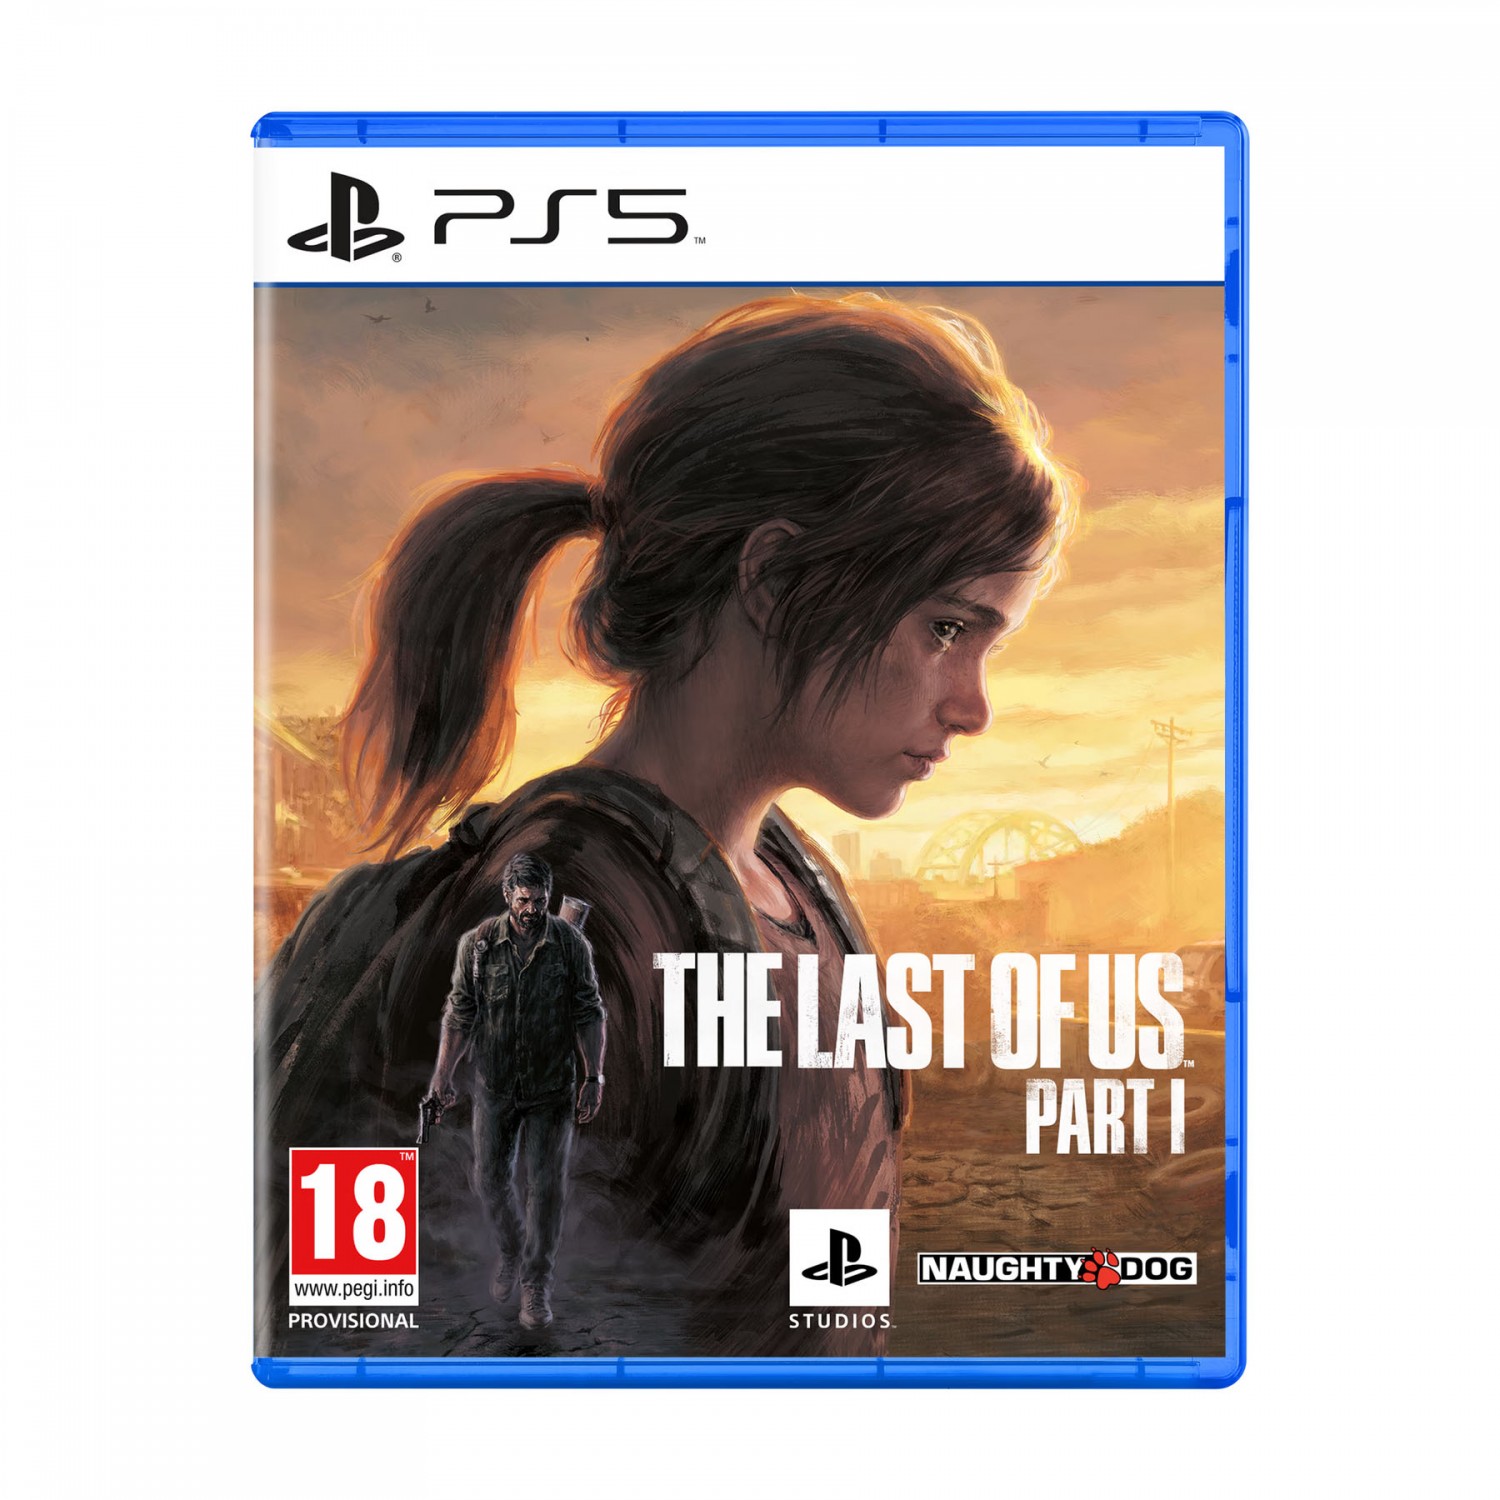 Ø¨Ø§Ø²ÛŒ The Last of Us Part 1 - PS5